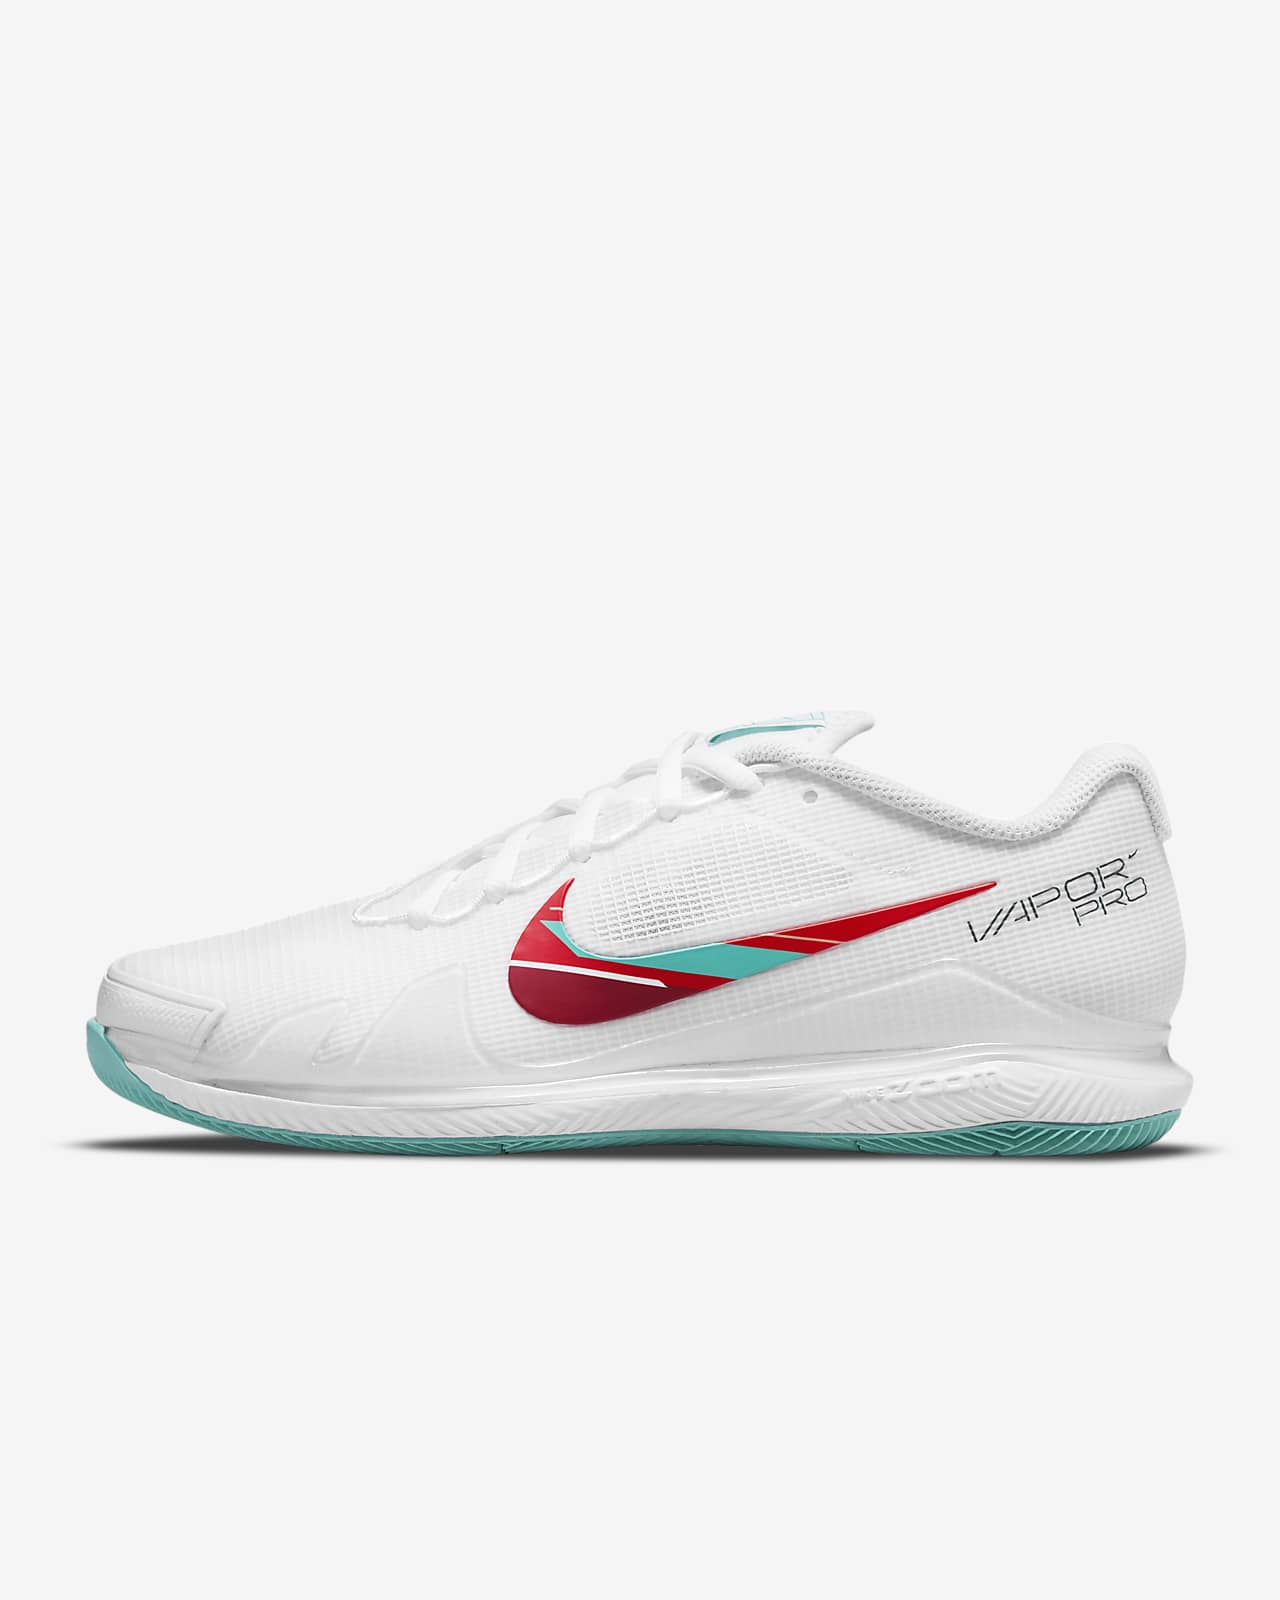 NikeCourt Air Zoom Vapor Pro Women's Hard-Court Tennis Shoe